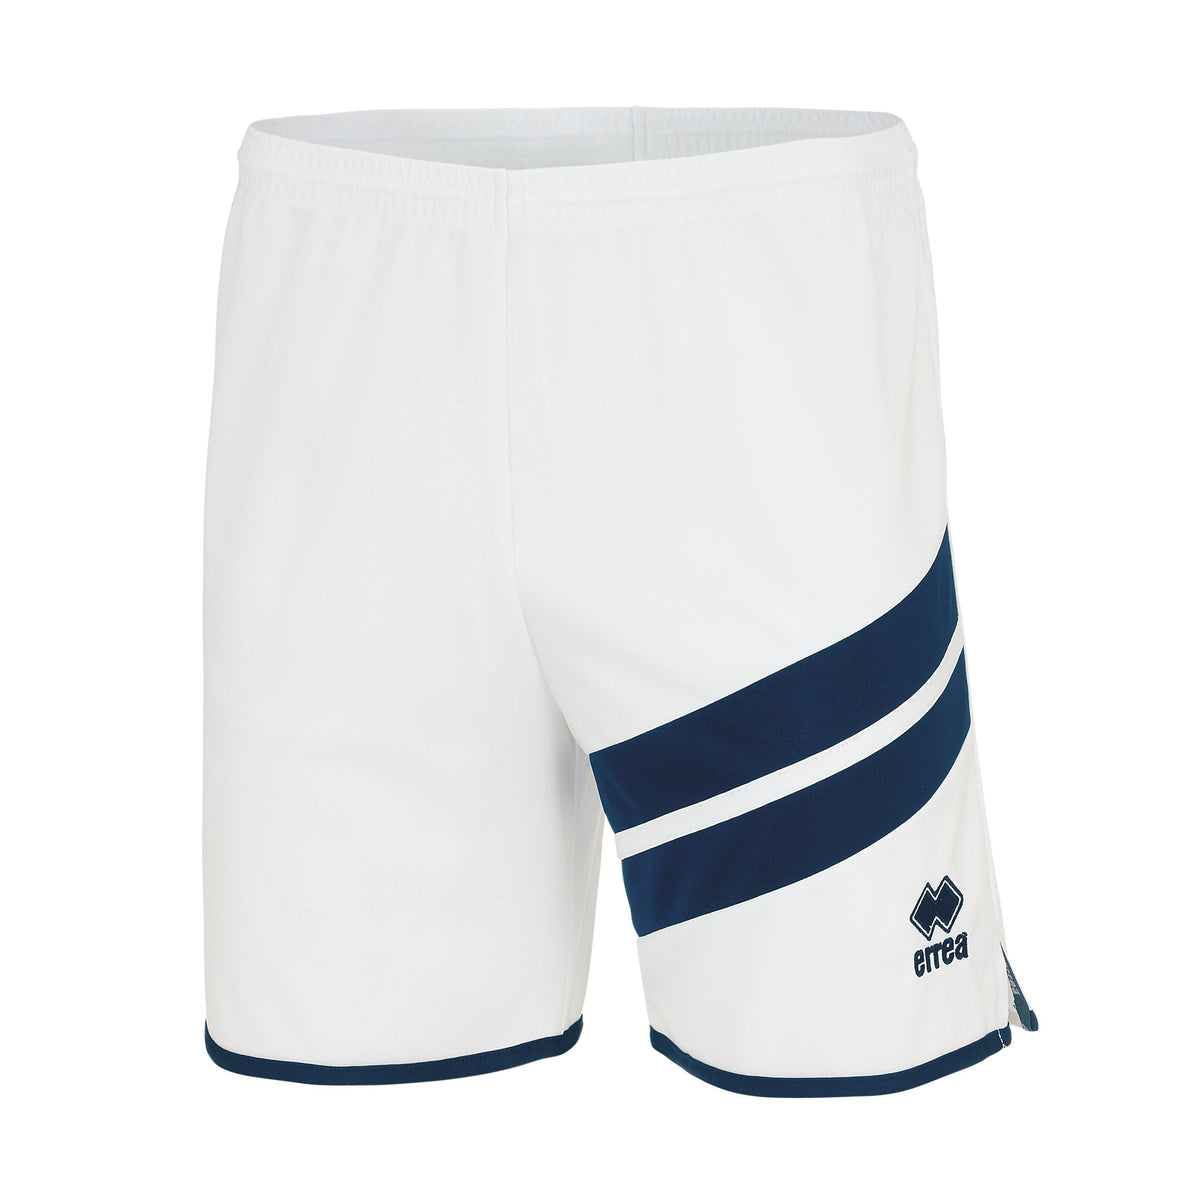 Navy/White Jaro Shorts in Adult x14